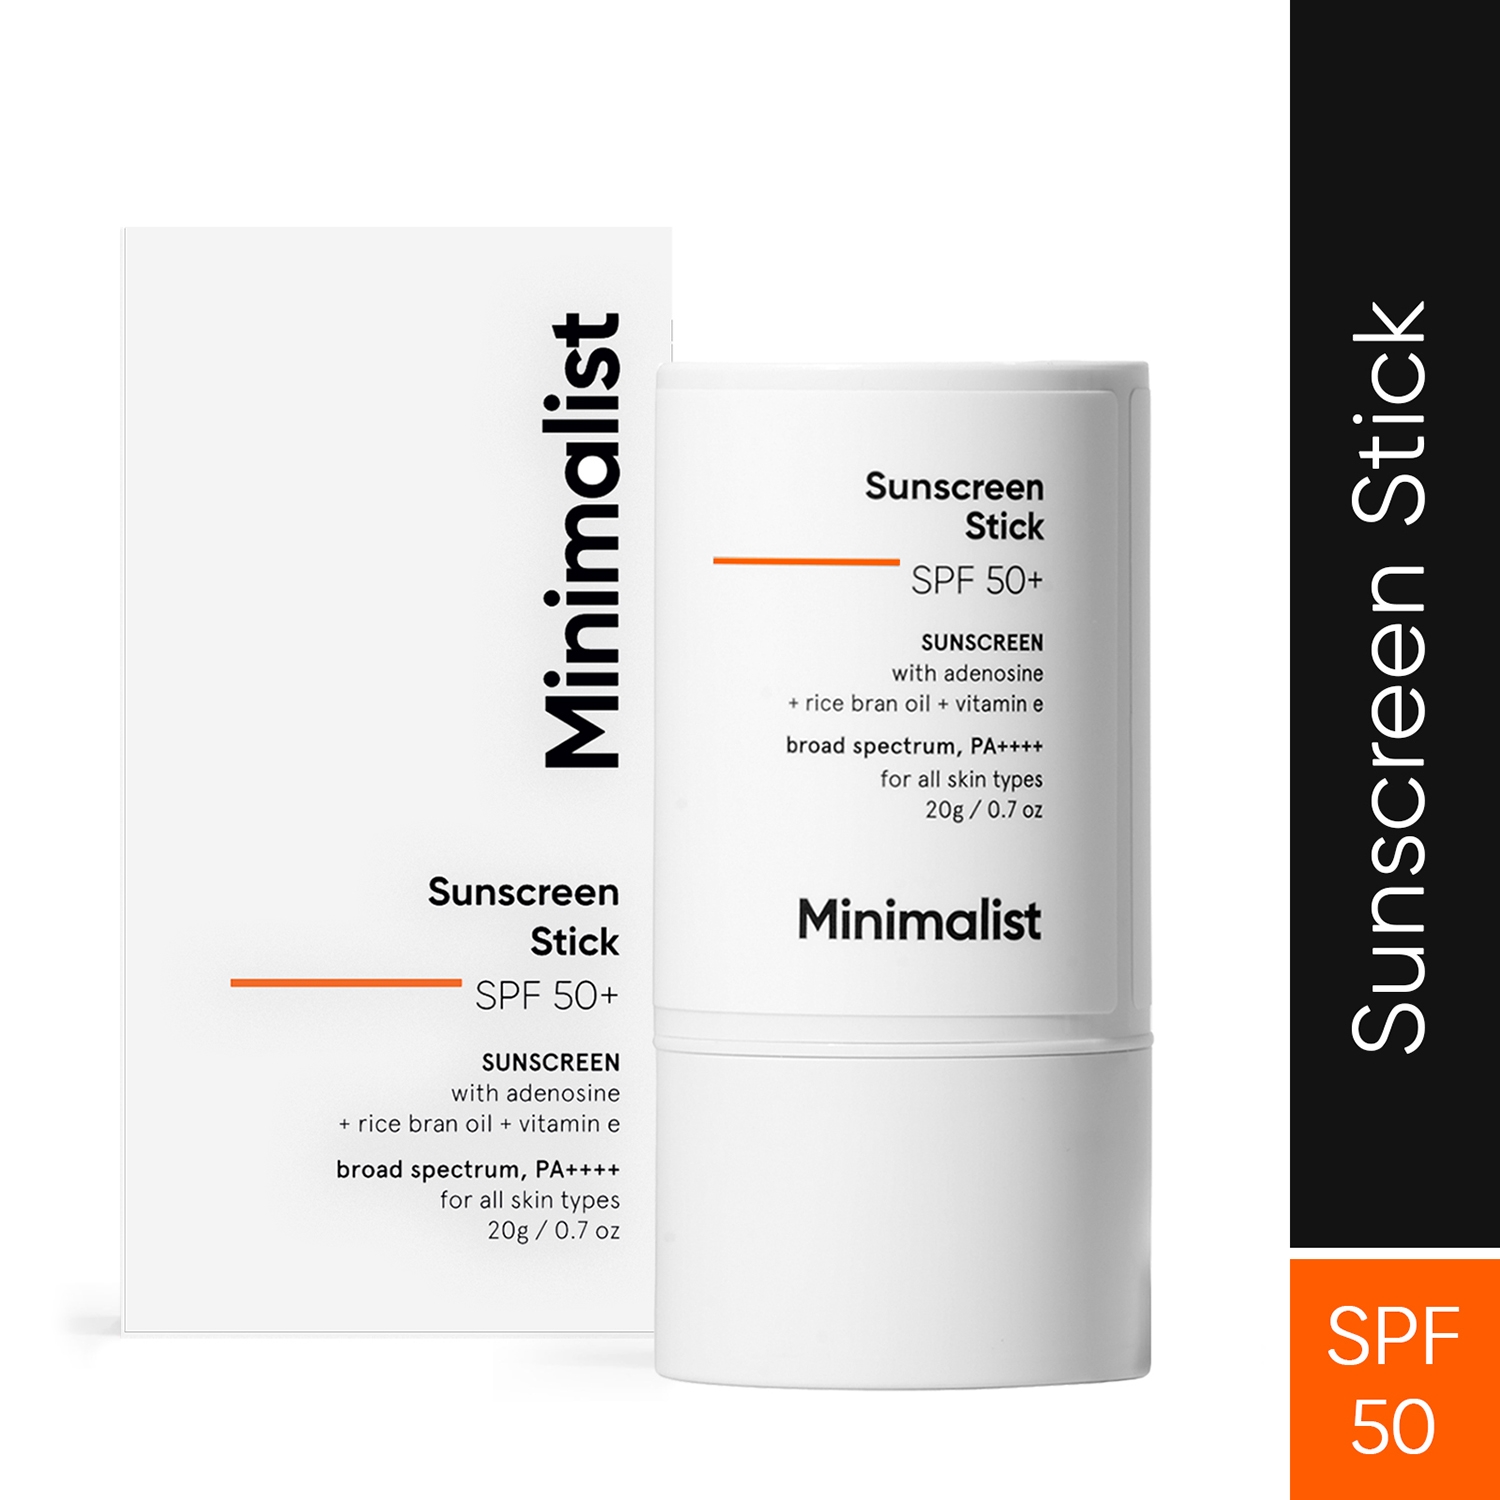 Buy Fixderma Shadow Sunscreen Stick SPF 50 with Vitamin E